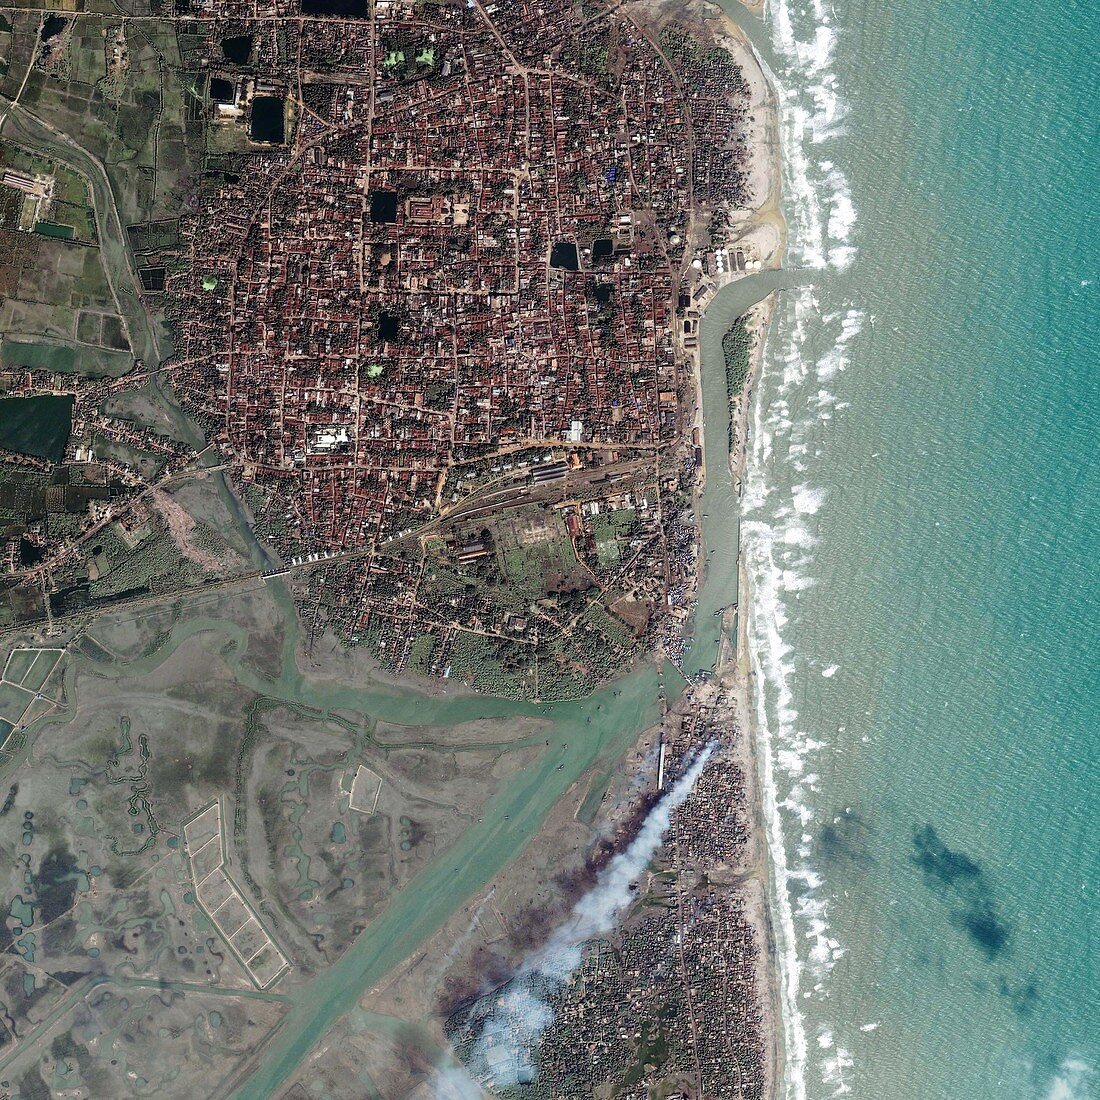 Indian coastal port after 2004 tsunami